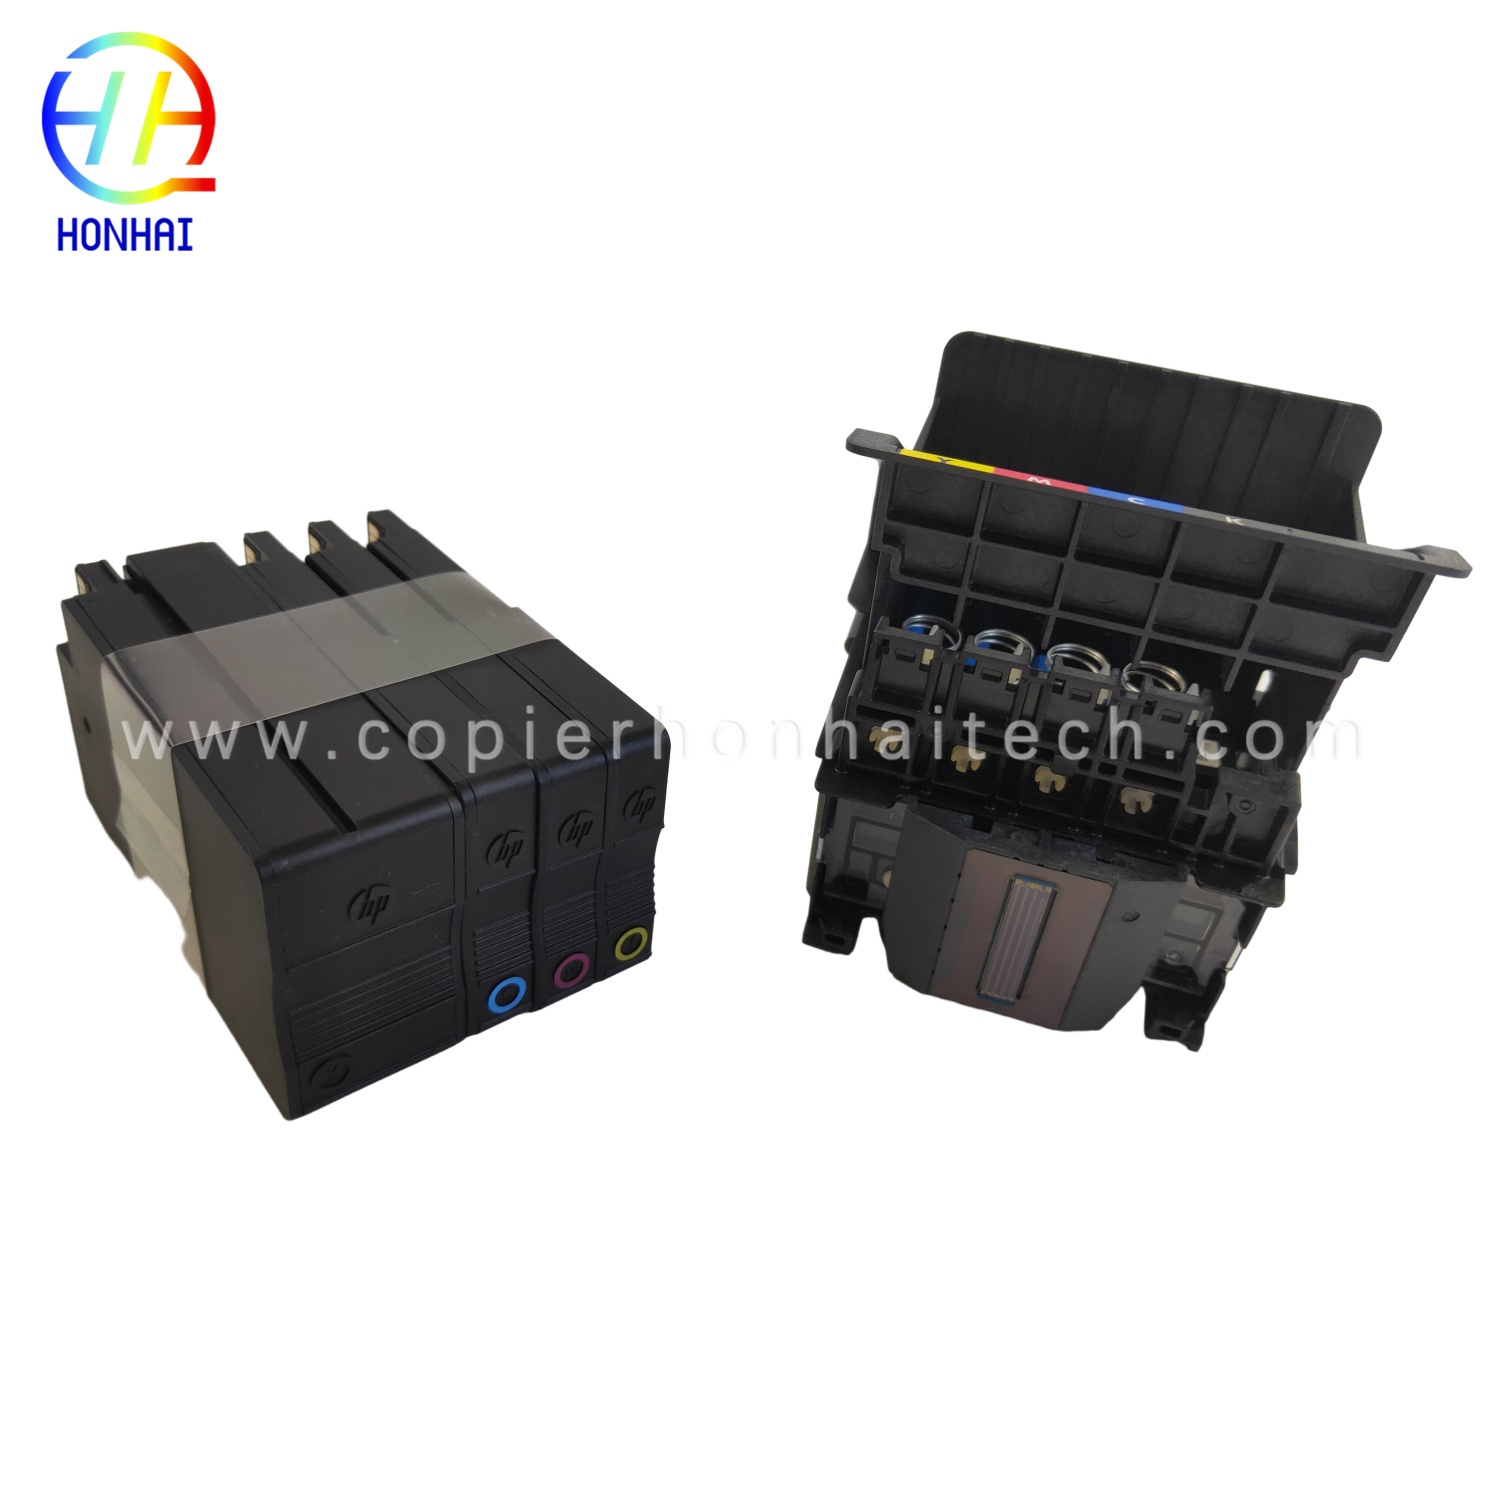 https://www.copierhonhaitech.com/original-new-gd-c1q10a-elp-garuda-printing-head-eplacement-kit-for-hp-designjet-t120-t125-t130-t520-t525-t530-ምርት/